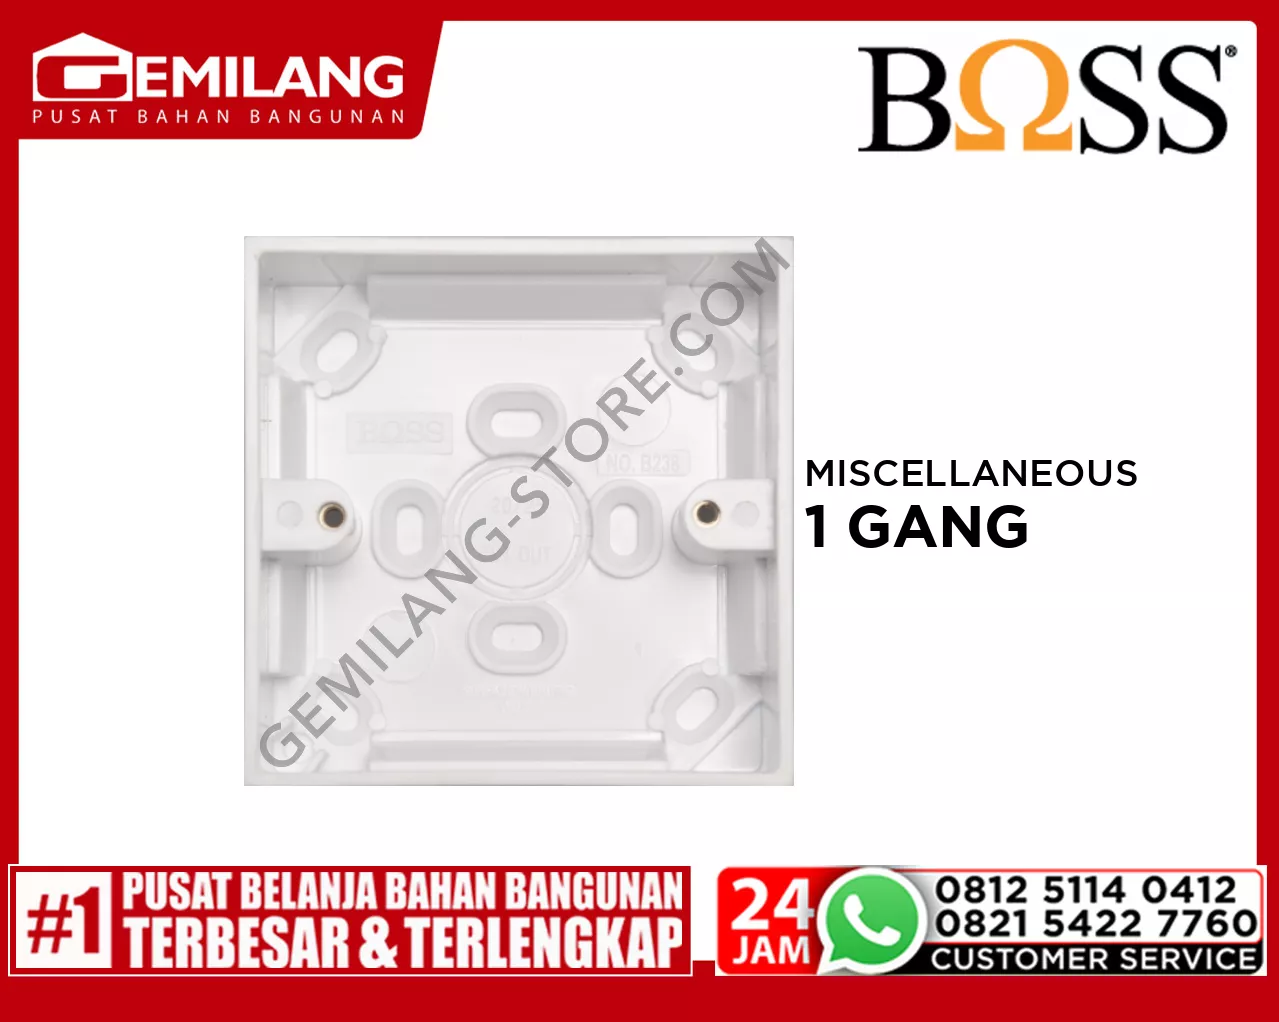 BOSS MISCELLANEOUS 1 GANG SURFACE PLASTIC BOX B238